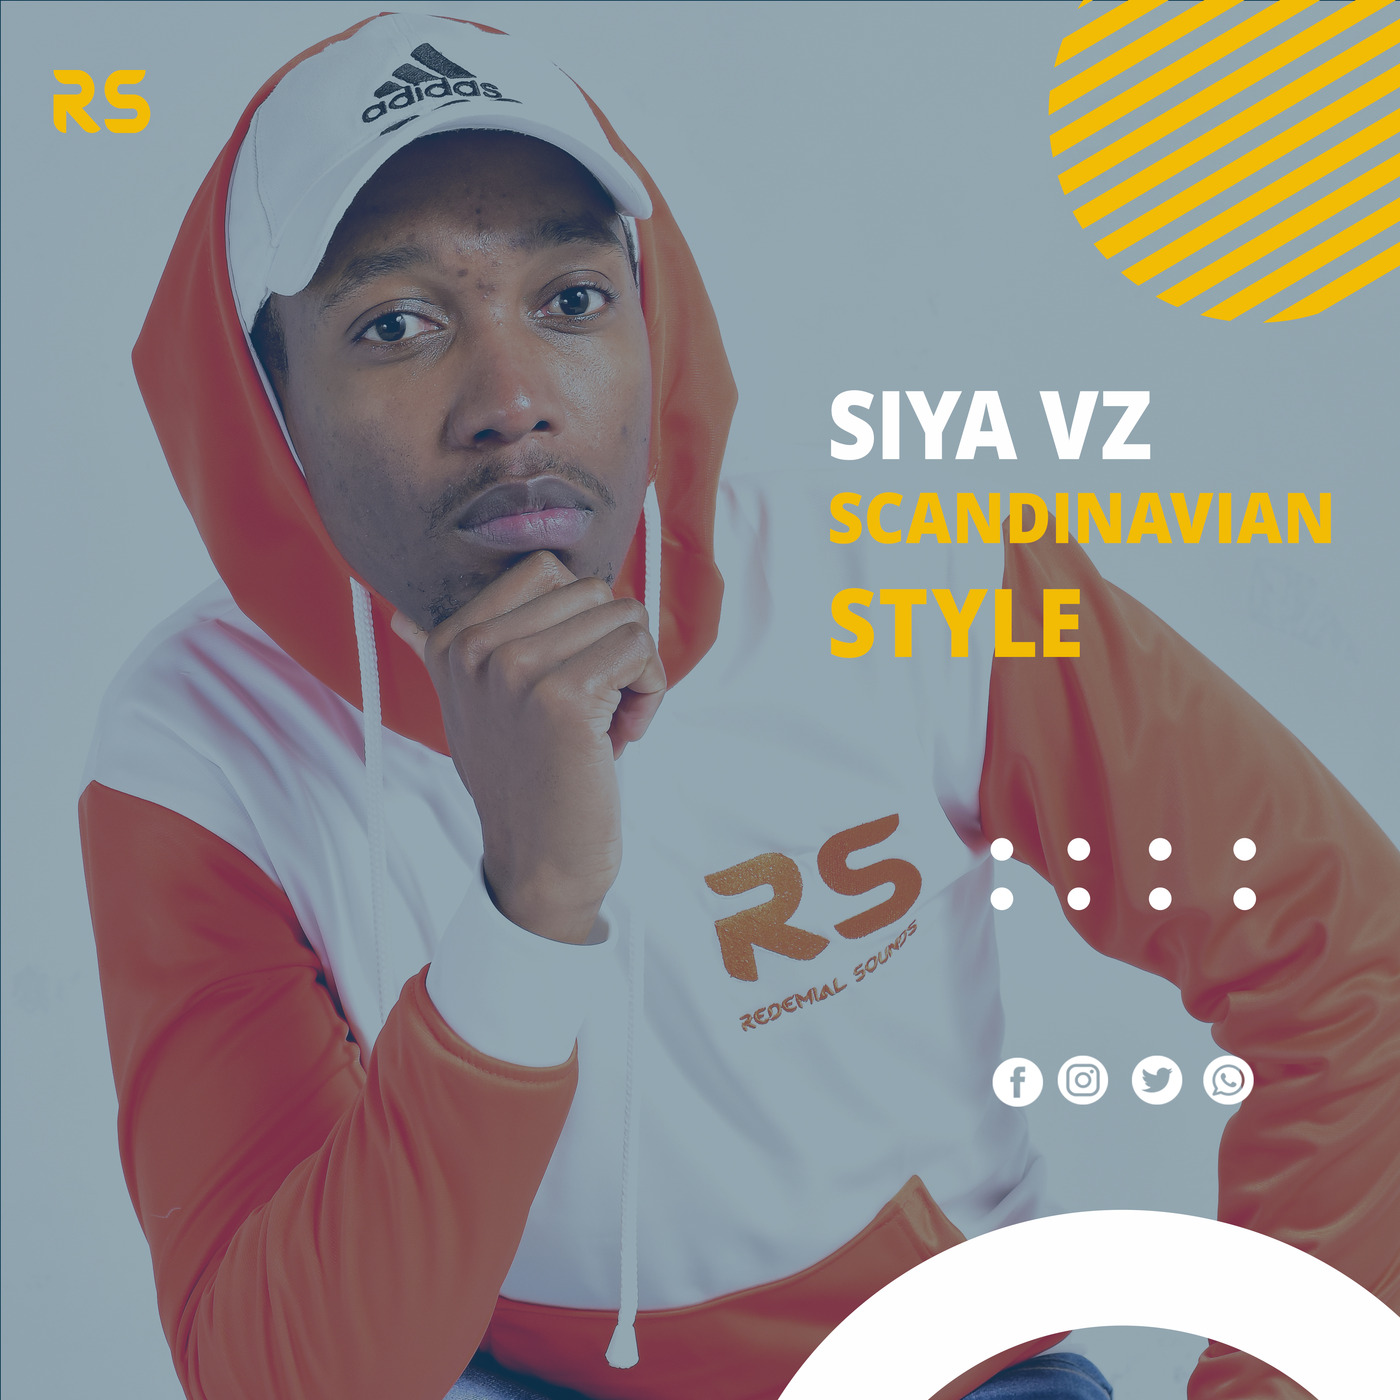 Siya VZ - Redemial Sounds Show 008 (Scandinavian Style)